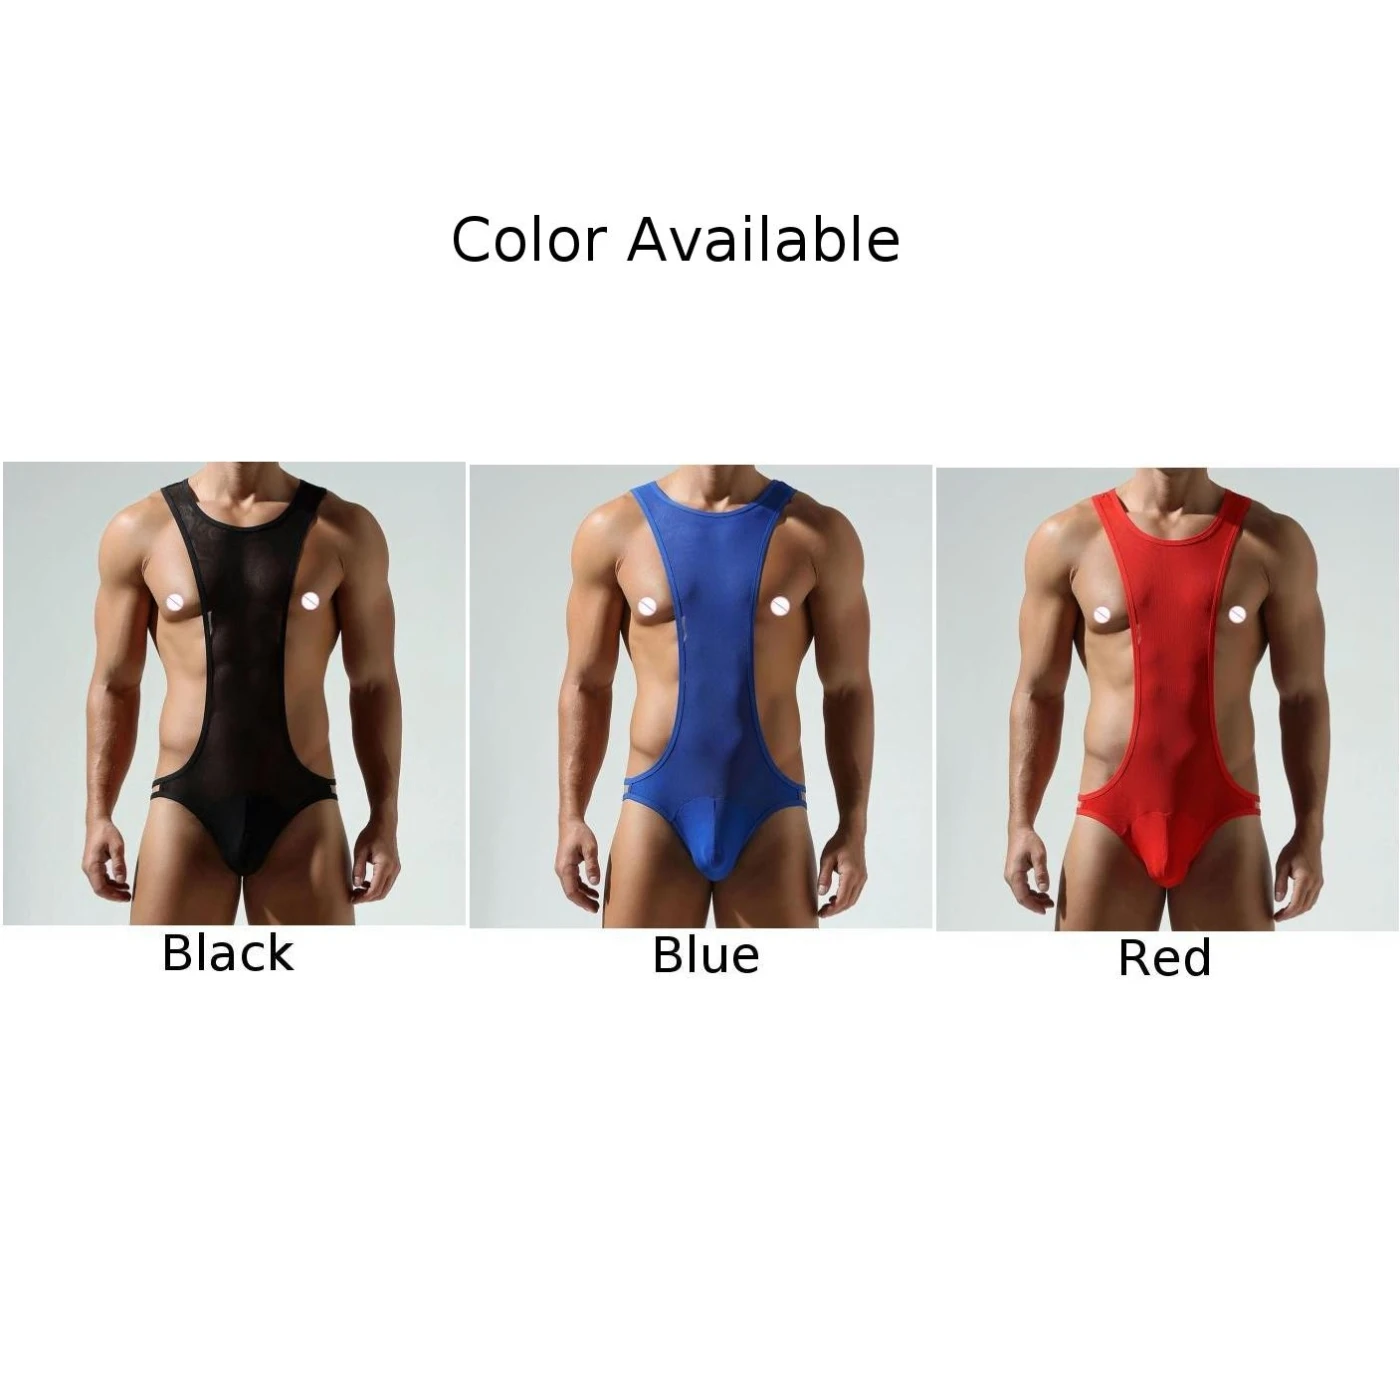 Comfy Mode Bodysuit Bodysuit Herfst Bodystocking Bodysuit Gloednieuwe Casual Jumpsuit Mannen Nylon Mouwloos